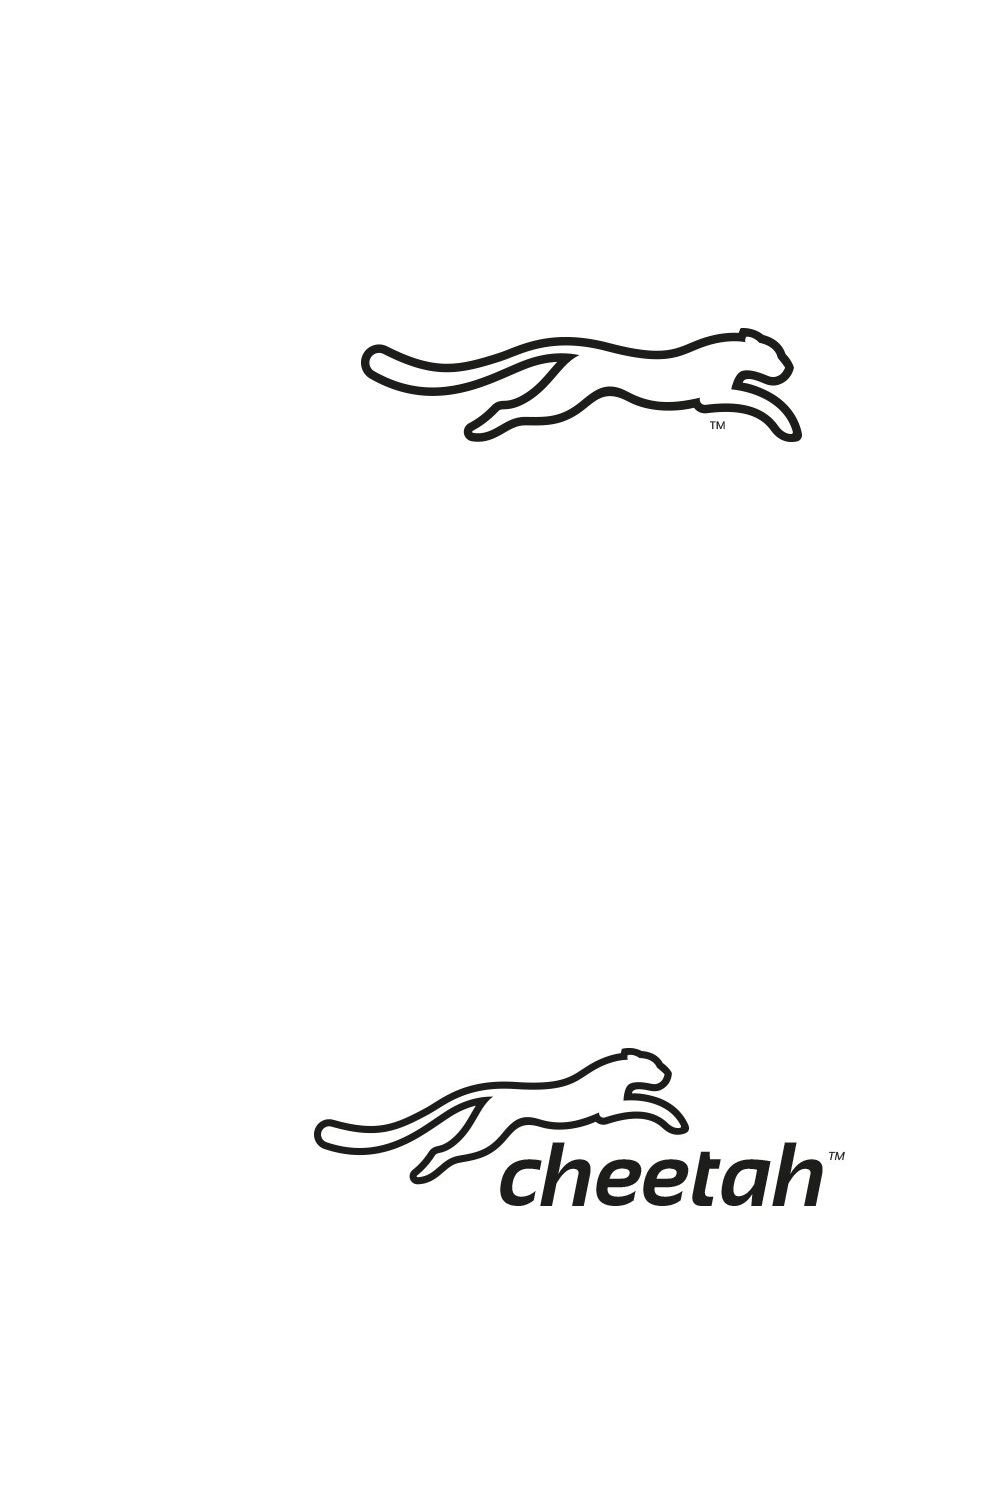 Cheetah Speed Logo pinterest preview image.